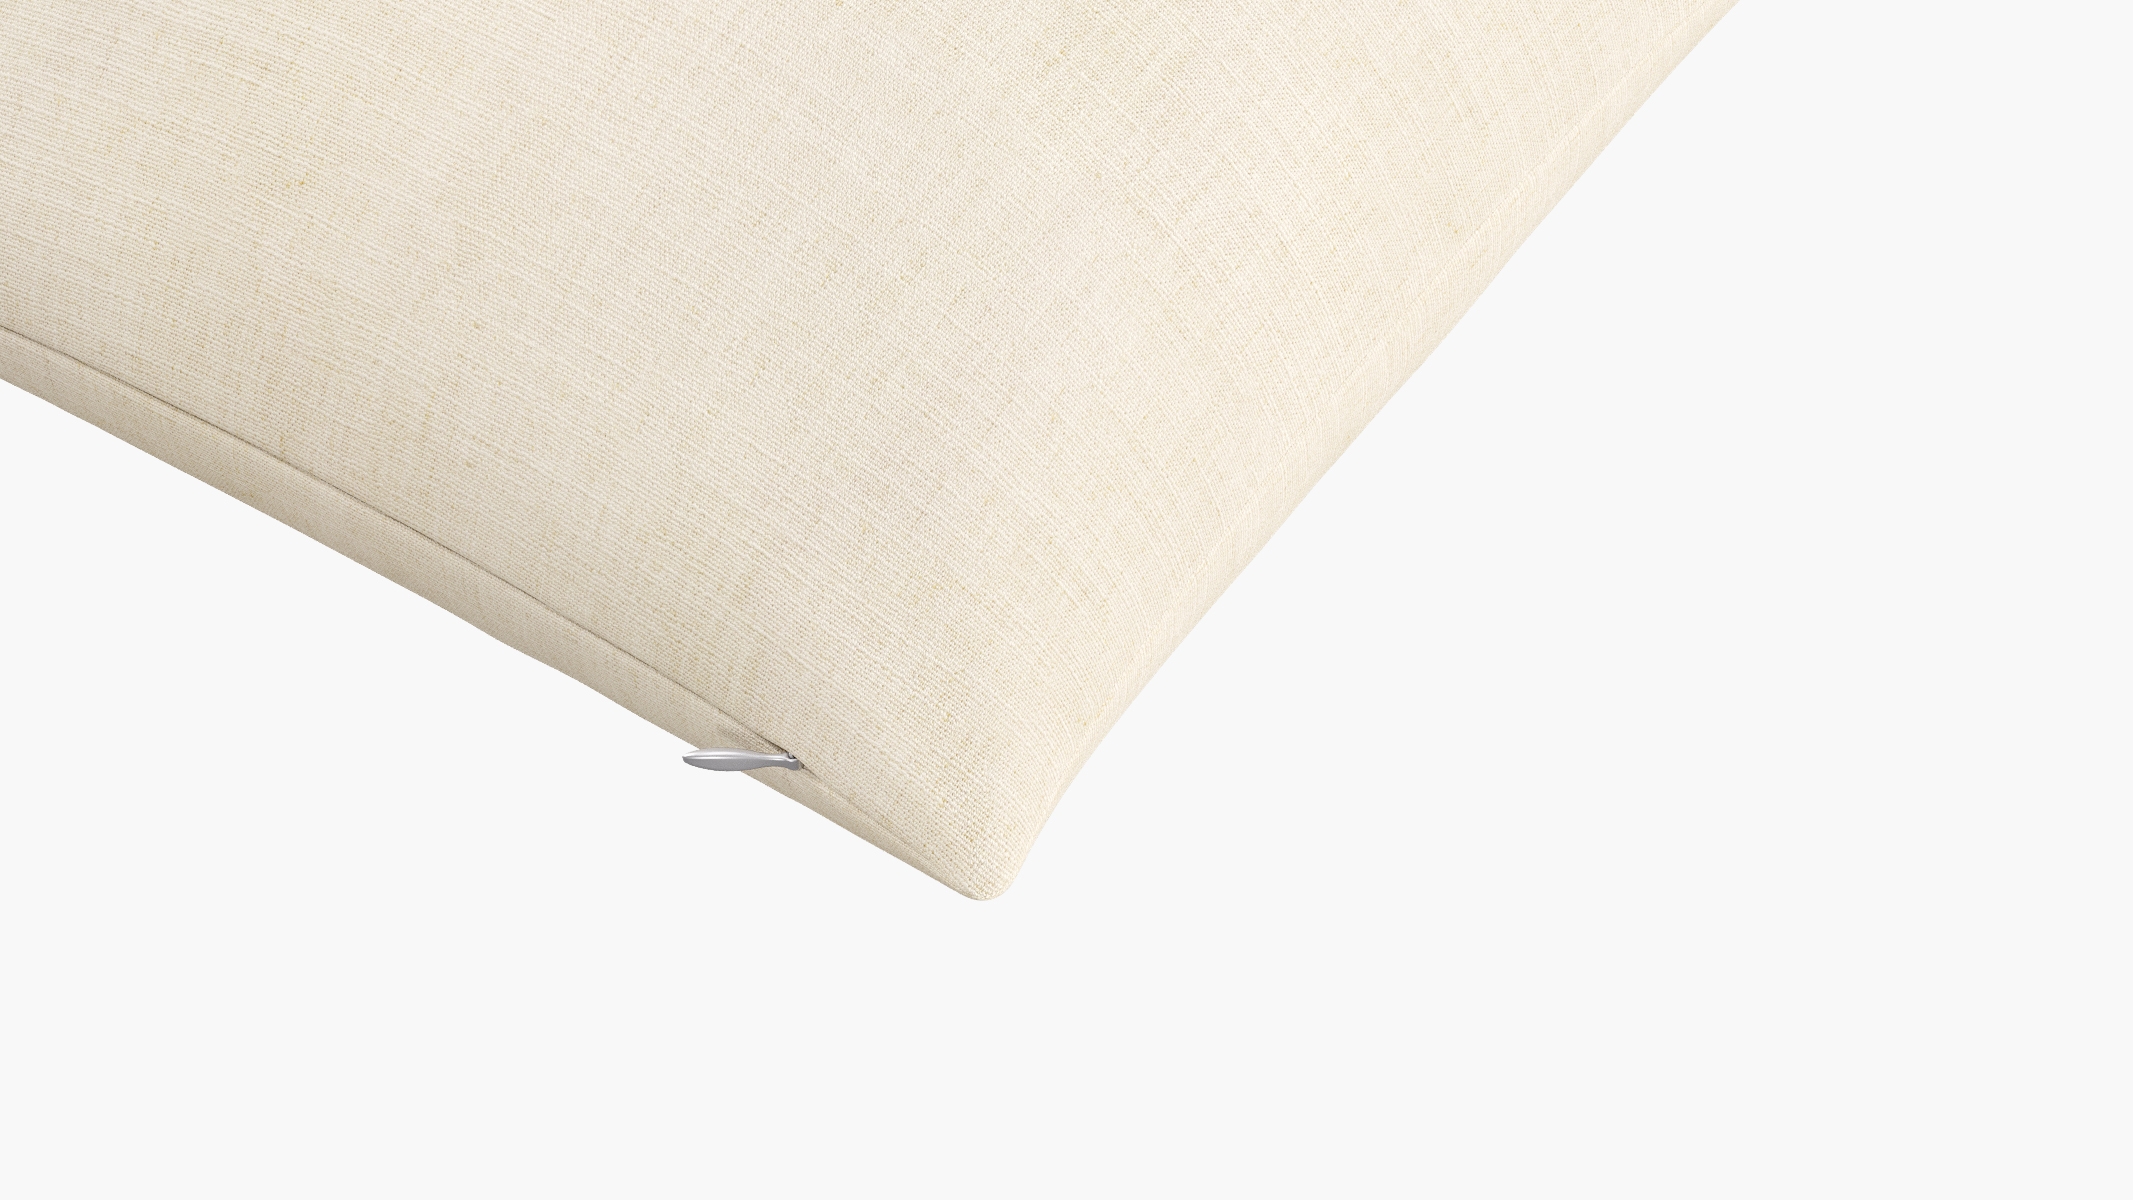 Throw Pillow 18", Talc Everyday Linen, 18" x 18" - Image 1